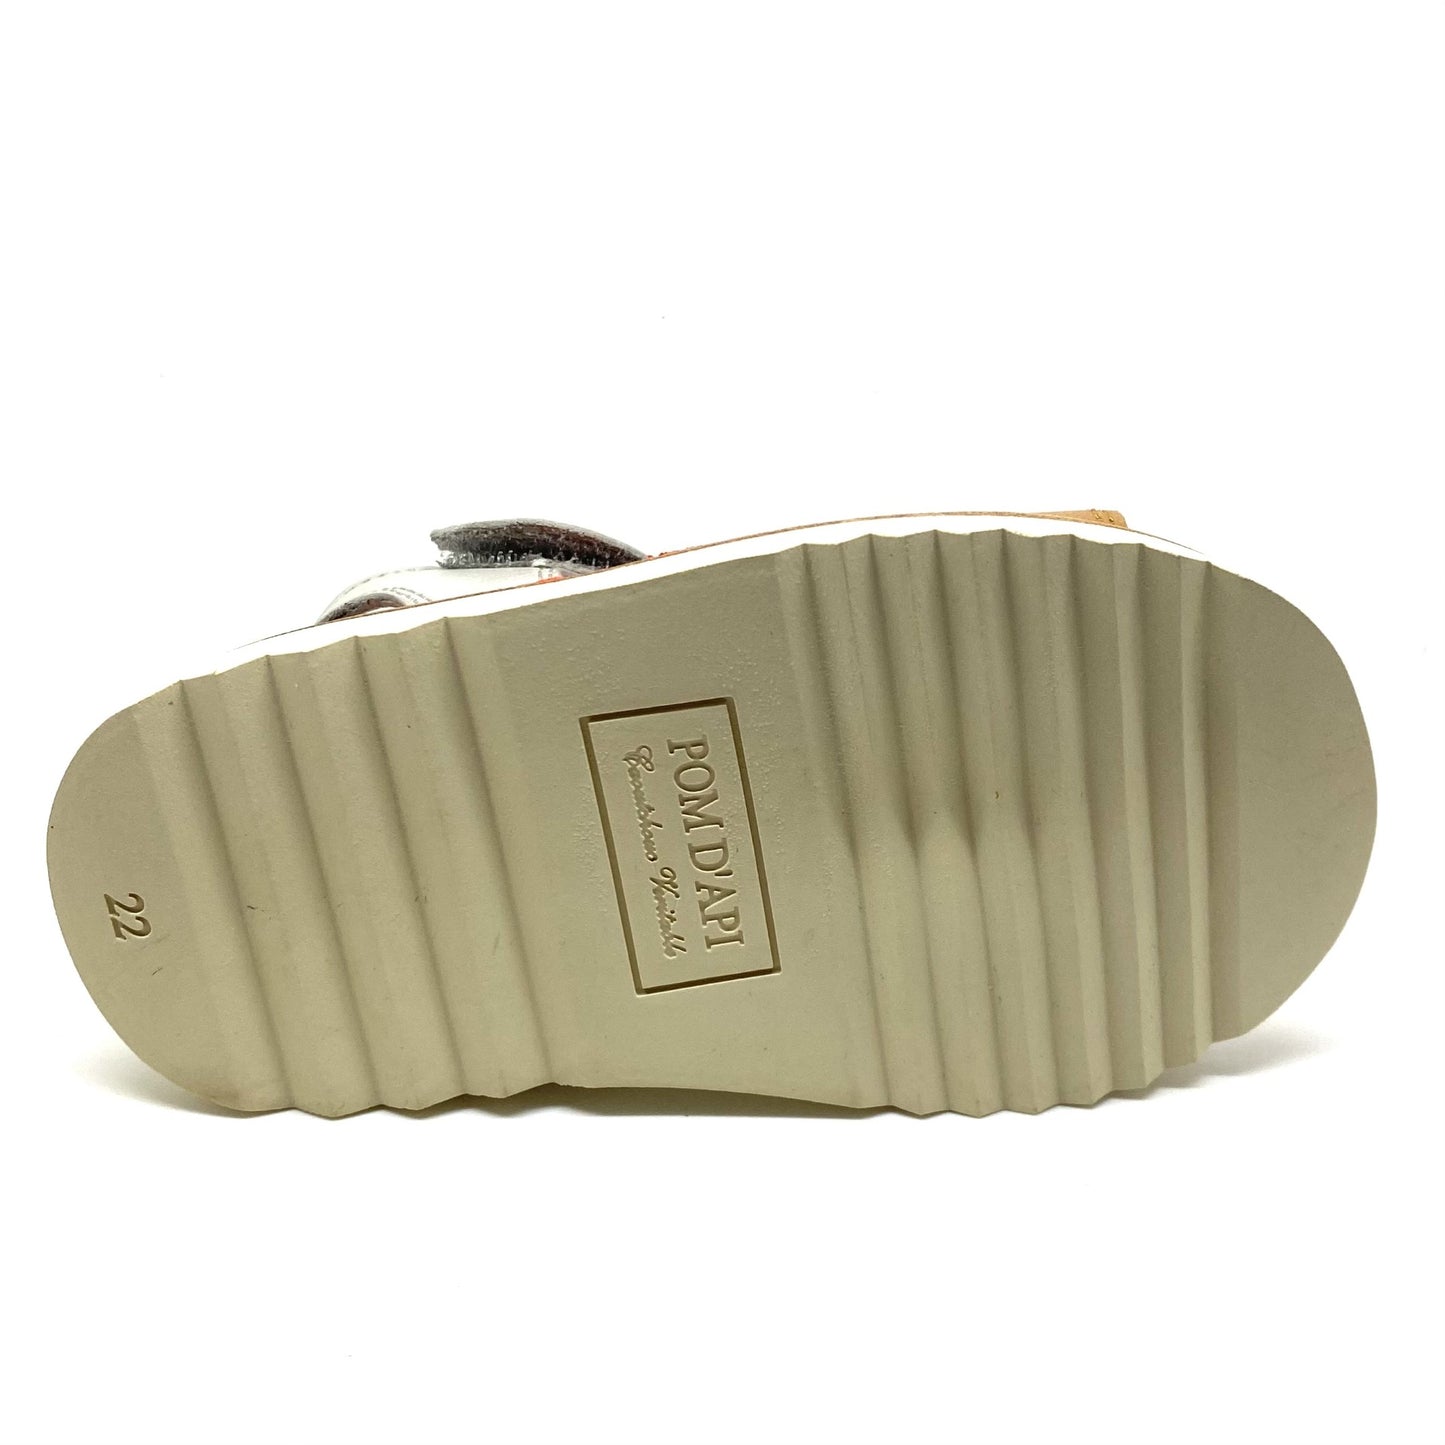 Pom D'Api sandaal met mooie kleurtjes.